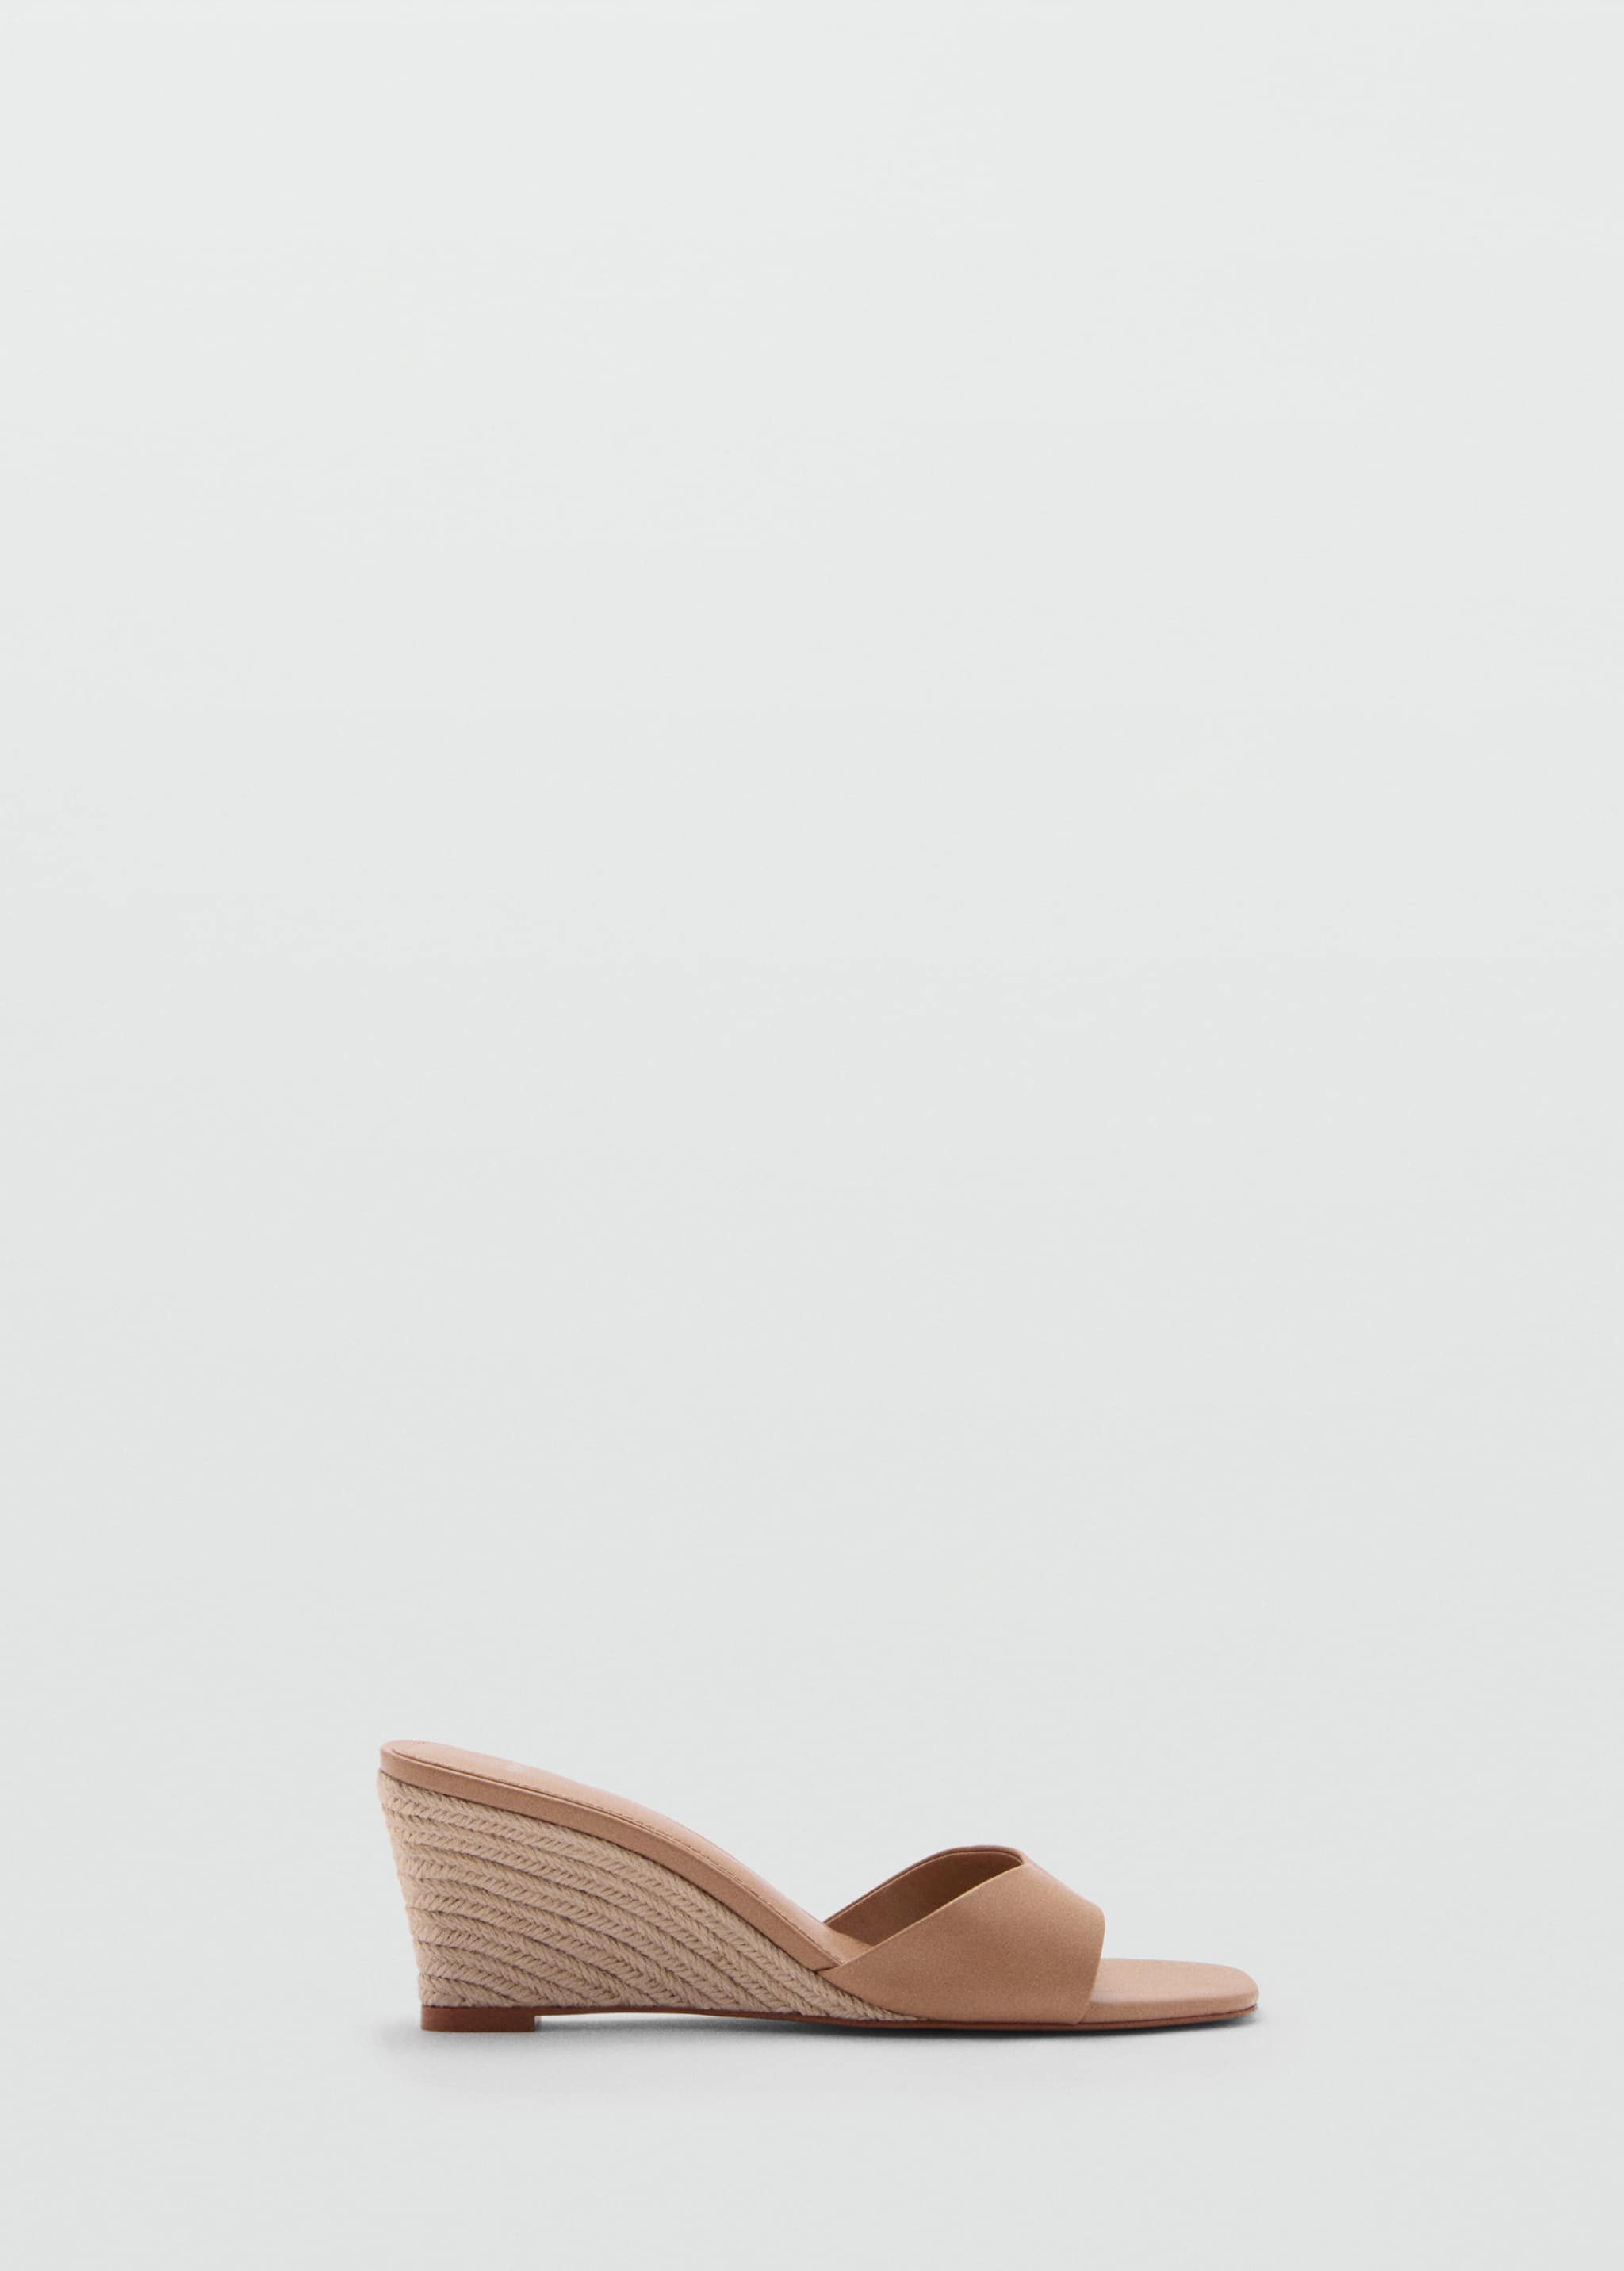 Wedge heeled sandal - Изделие без модели